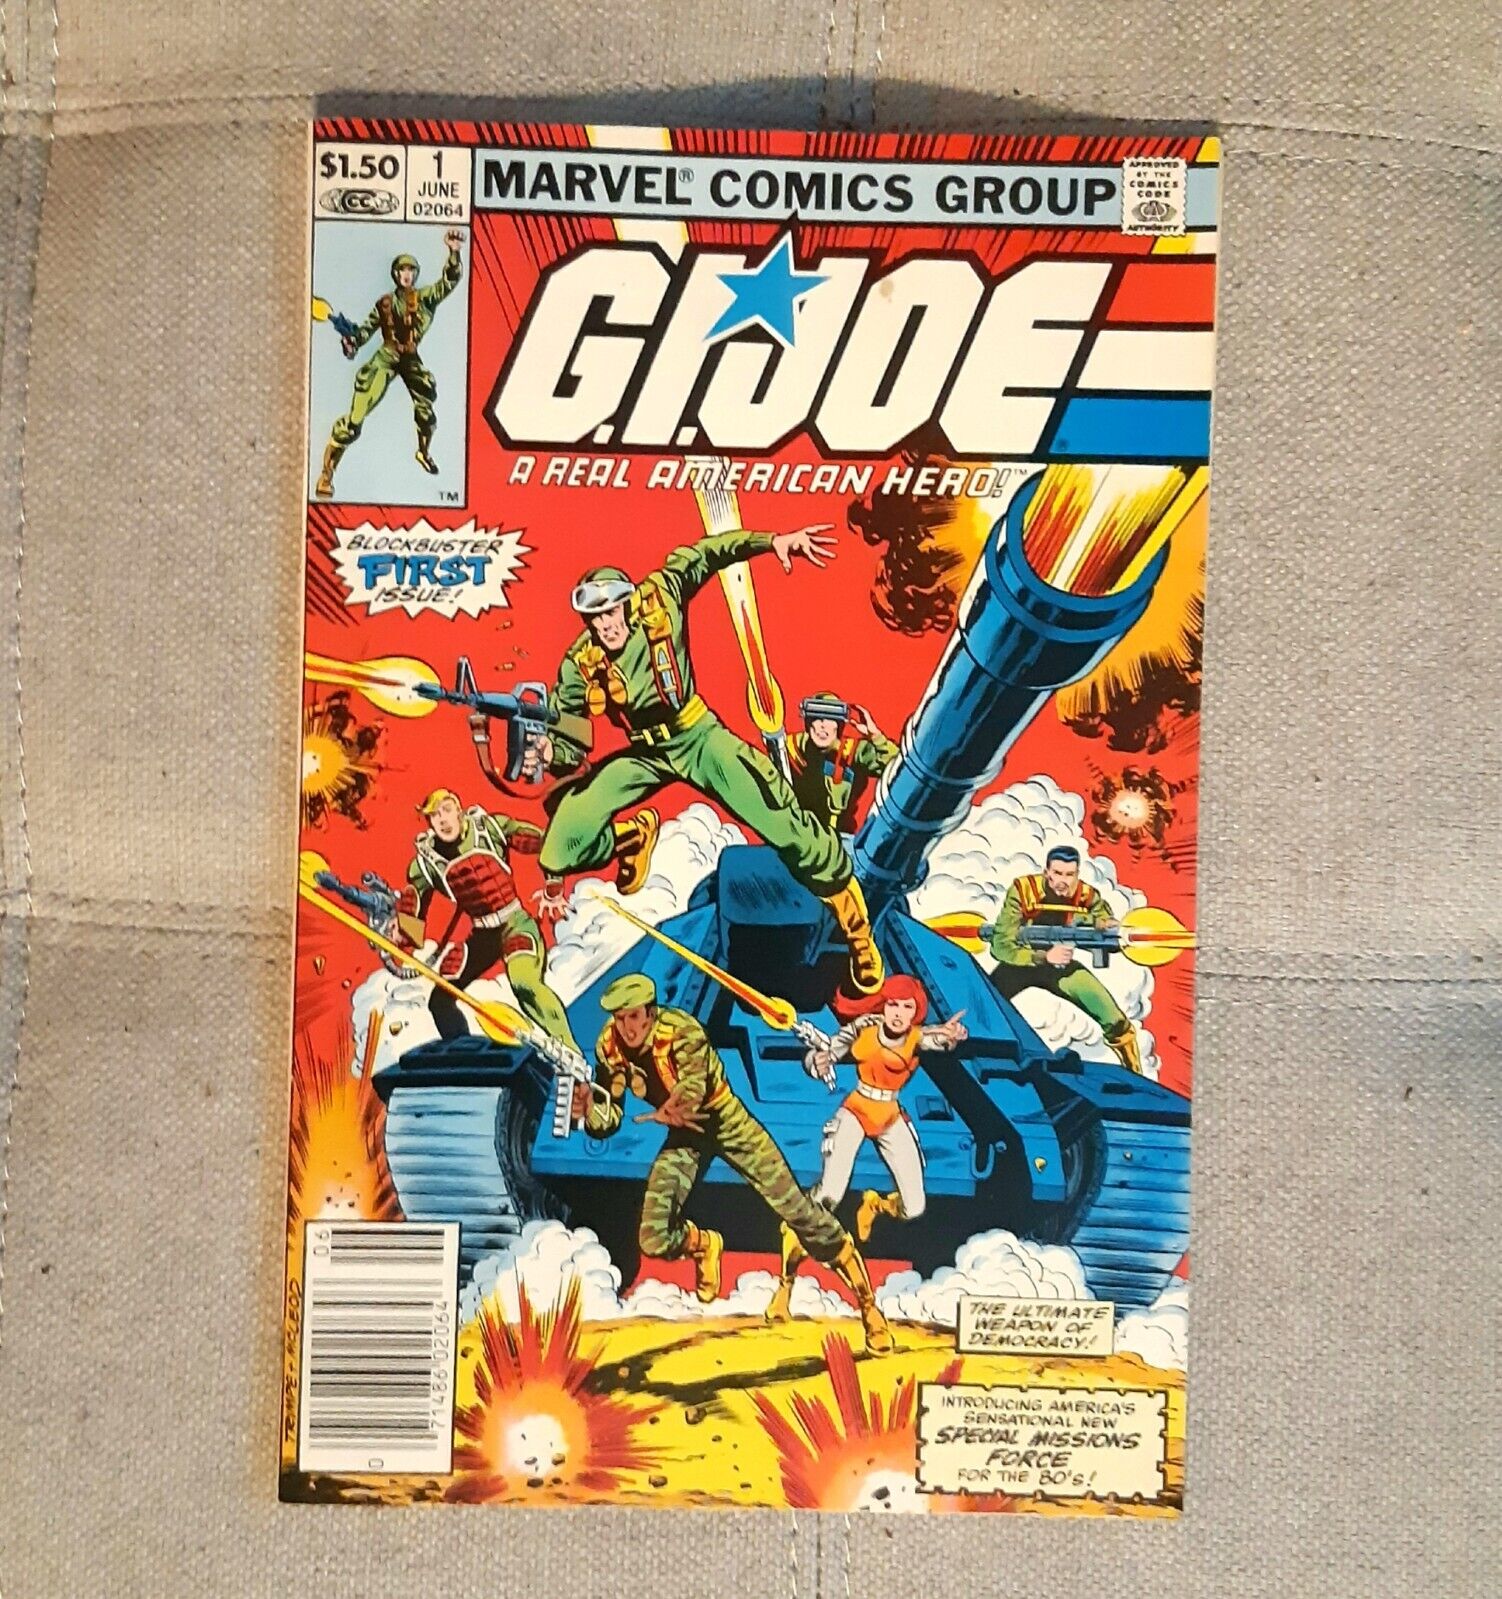 Vintage G.I. JOE COMIC Blockbuster FIRST ISSUE June 1 1982 Vol. 1, No. 1